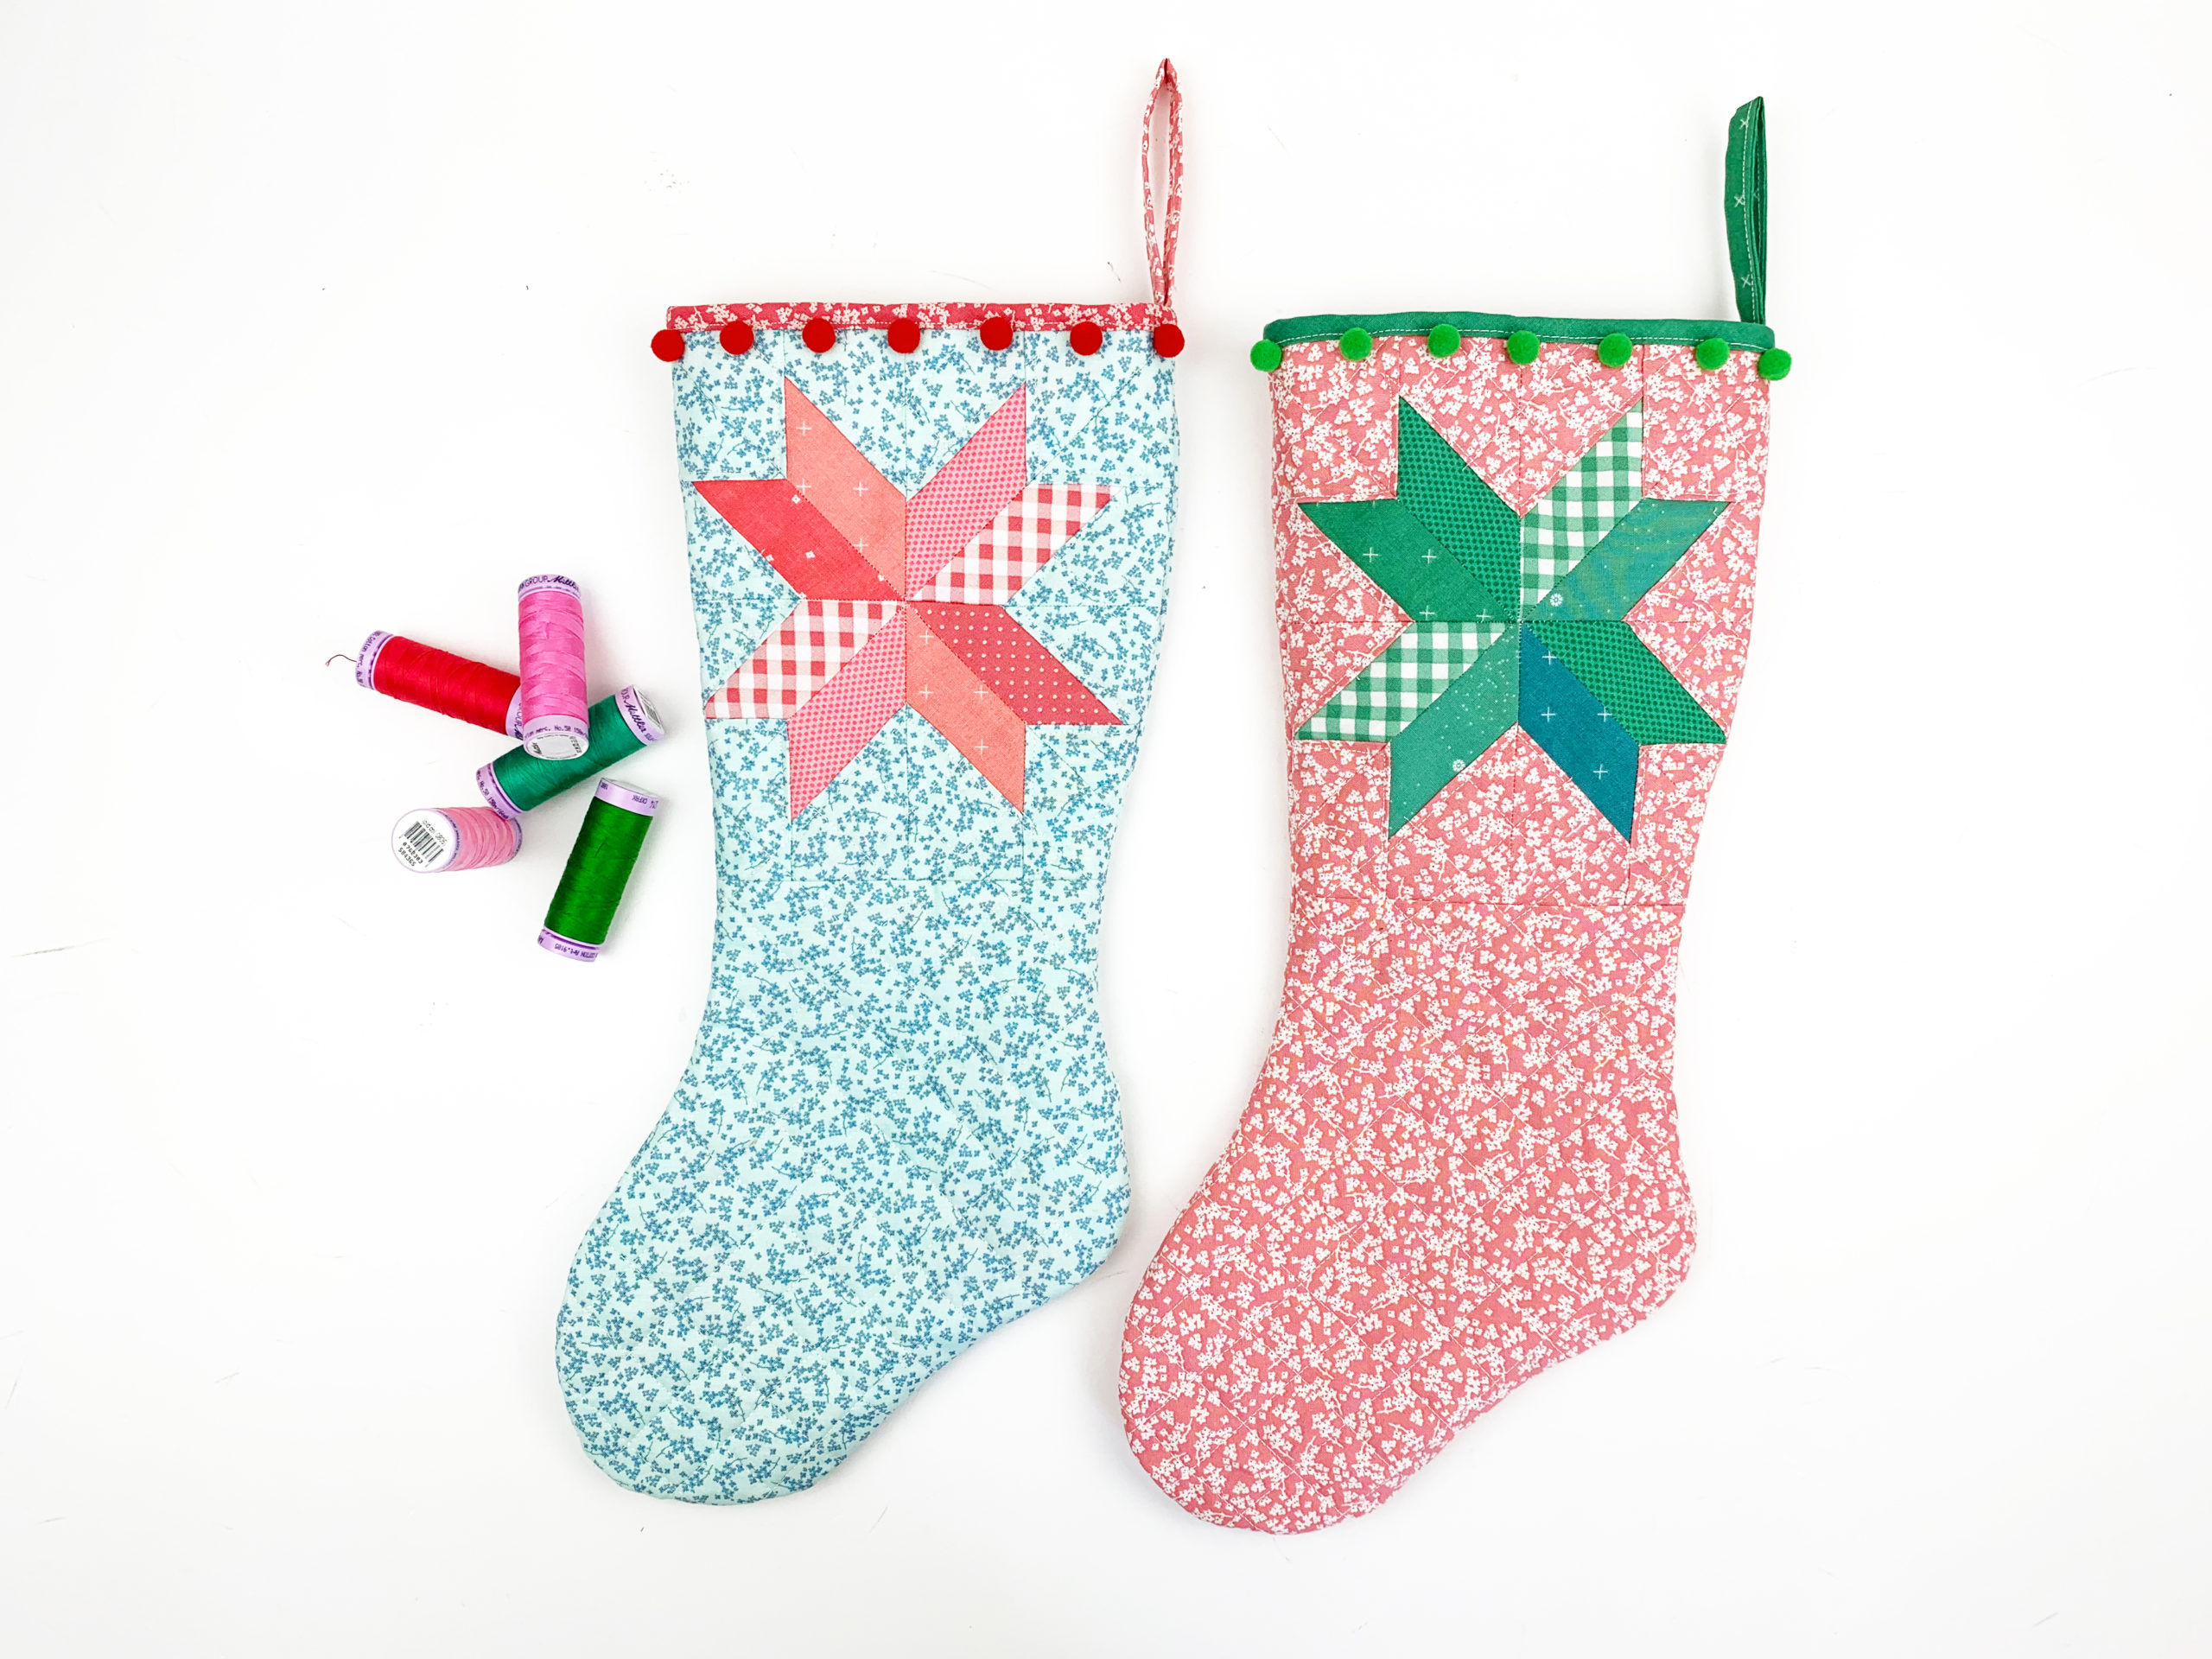 LeMoyne star Christmas stocking pattern